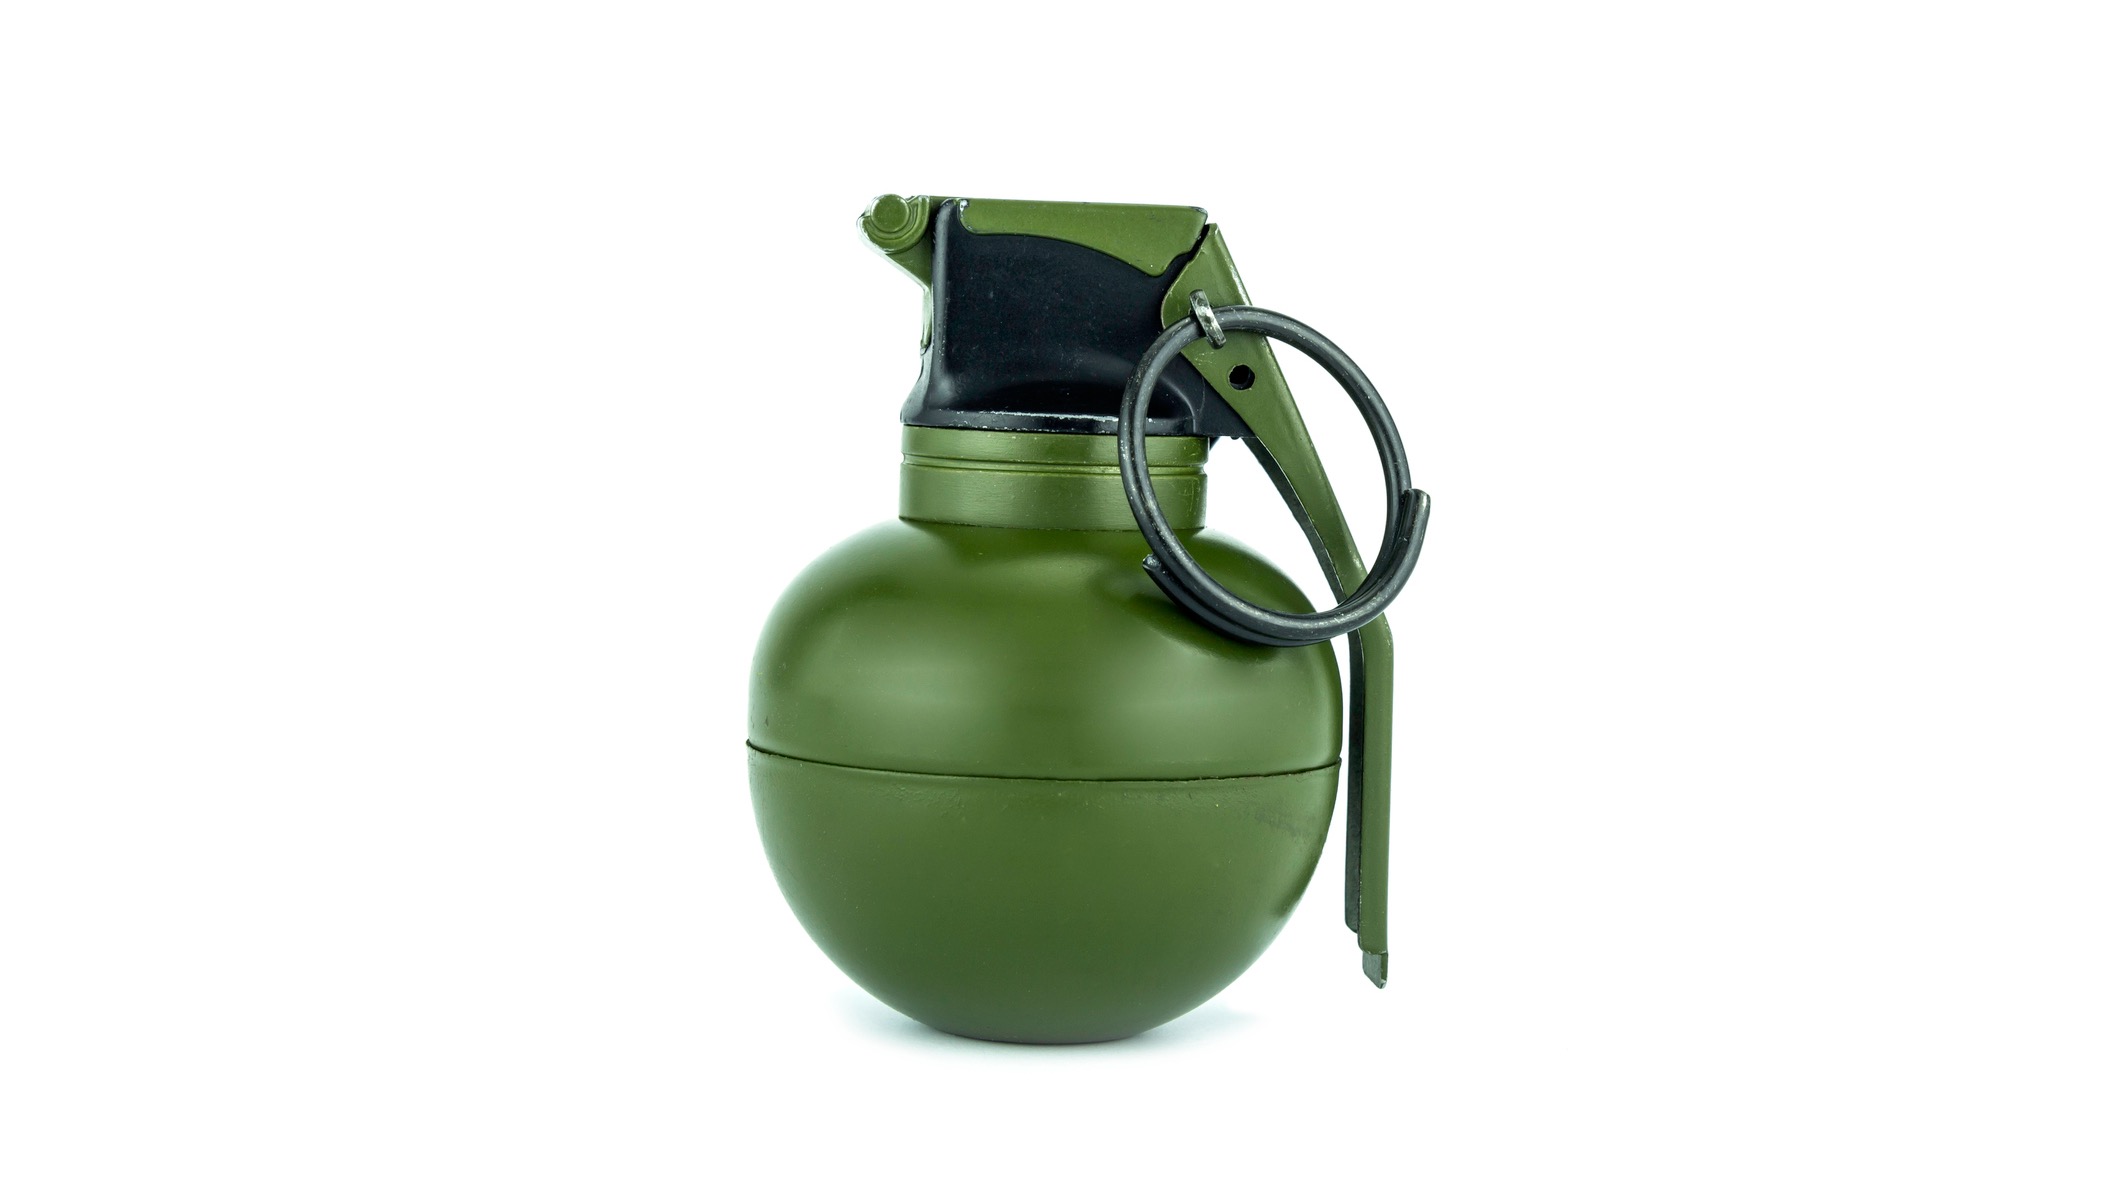 stock image of a handheld m67 grenade